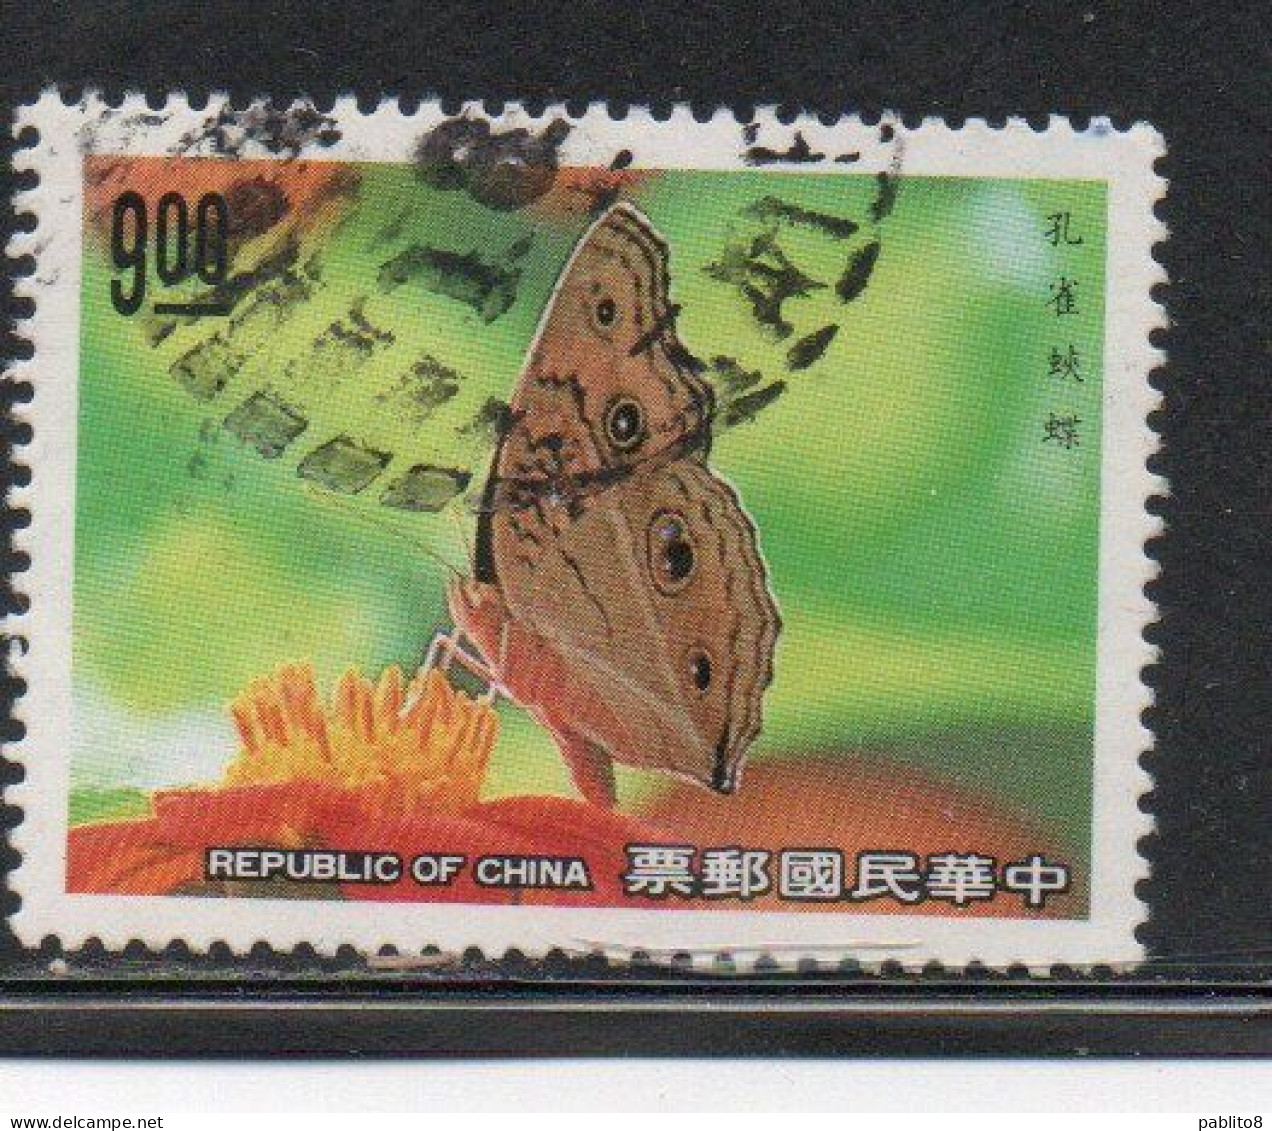 CHINA REPUBLIC CINA TAIWAN FORMOSA 1990 BUTTERFLIES PRECIS ALMANA 9$ USED USATO OBLITERE' - Gebruikt